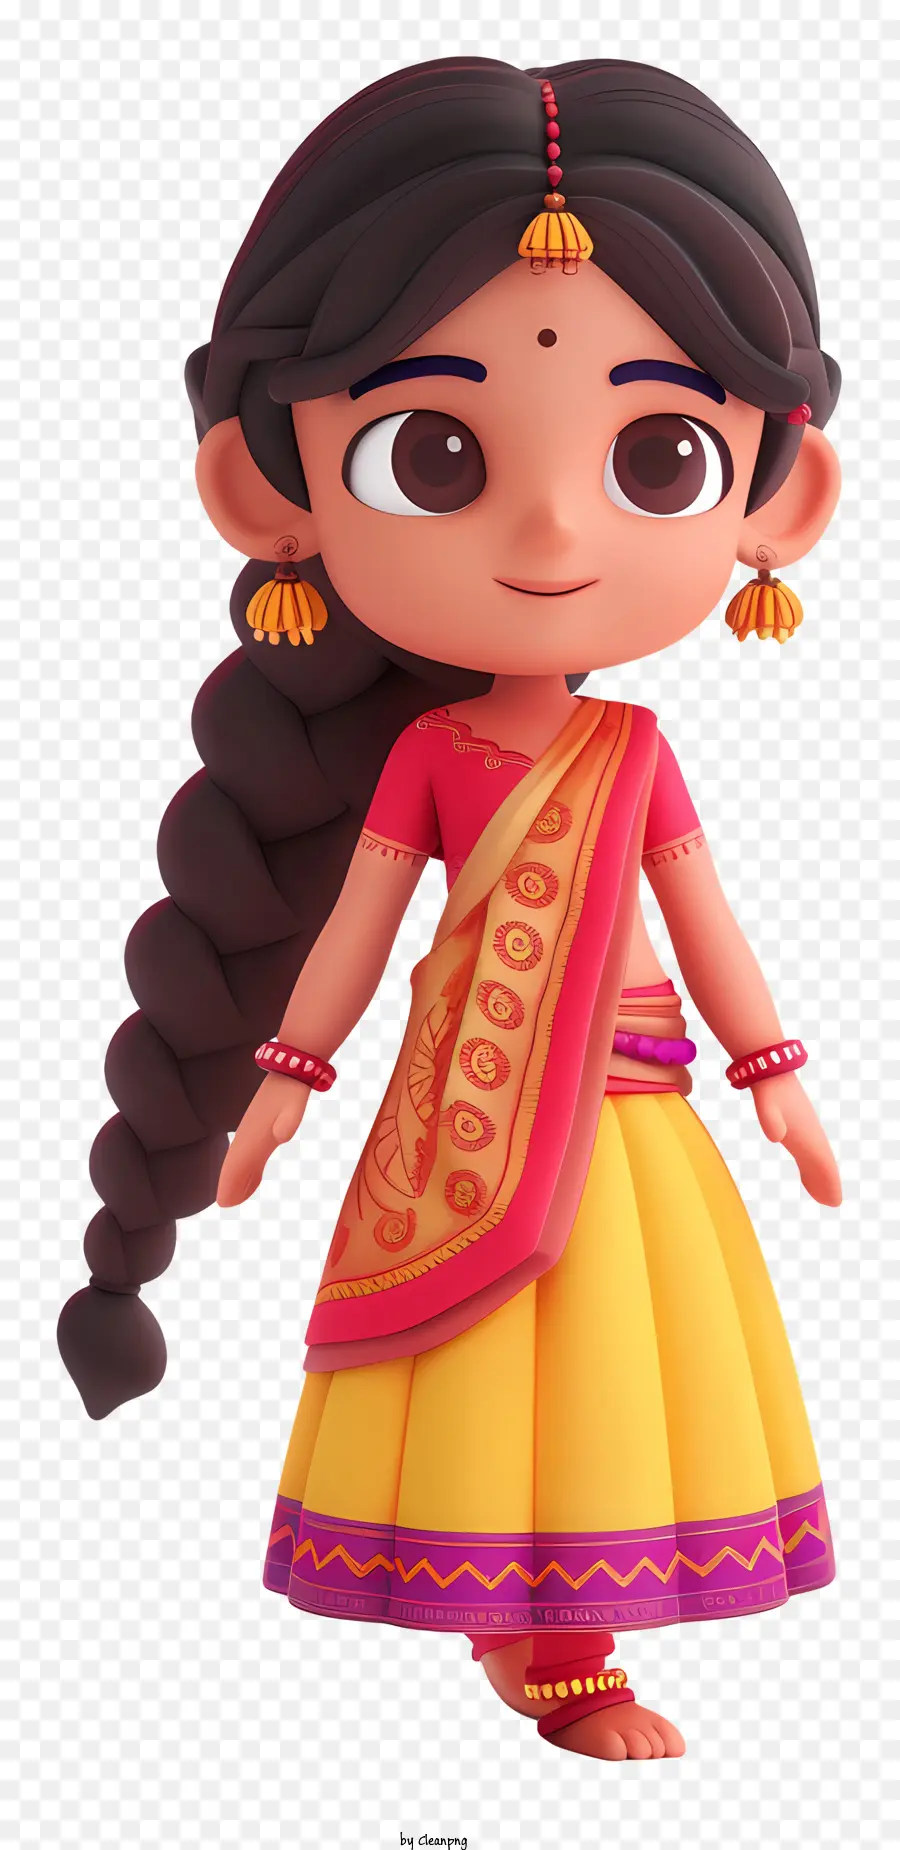 indian girl indian sari traditional clothing long braid red